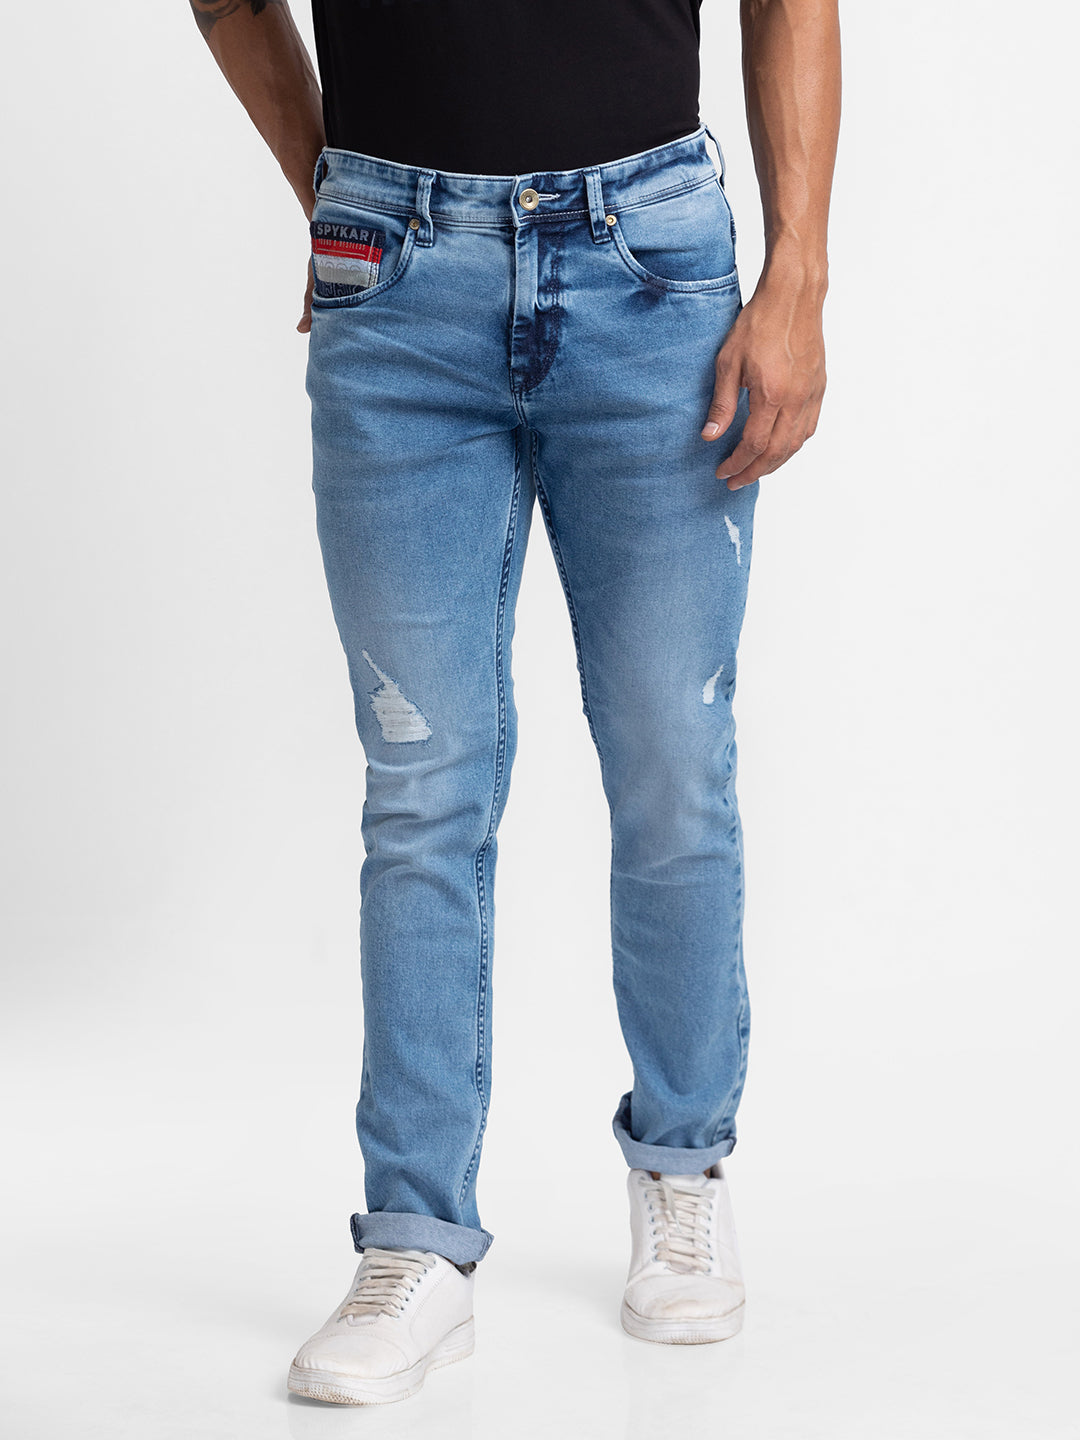 Spykar Light Blue Cotton Regular Fit Narrow Length Jeans For Men (Rover)